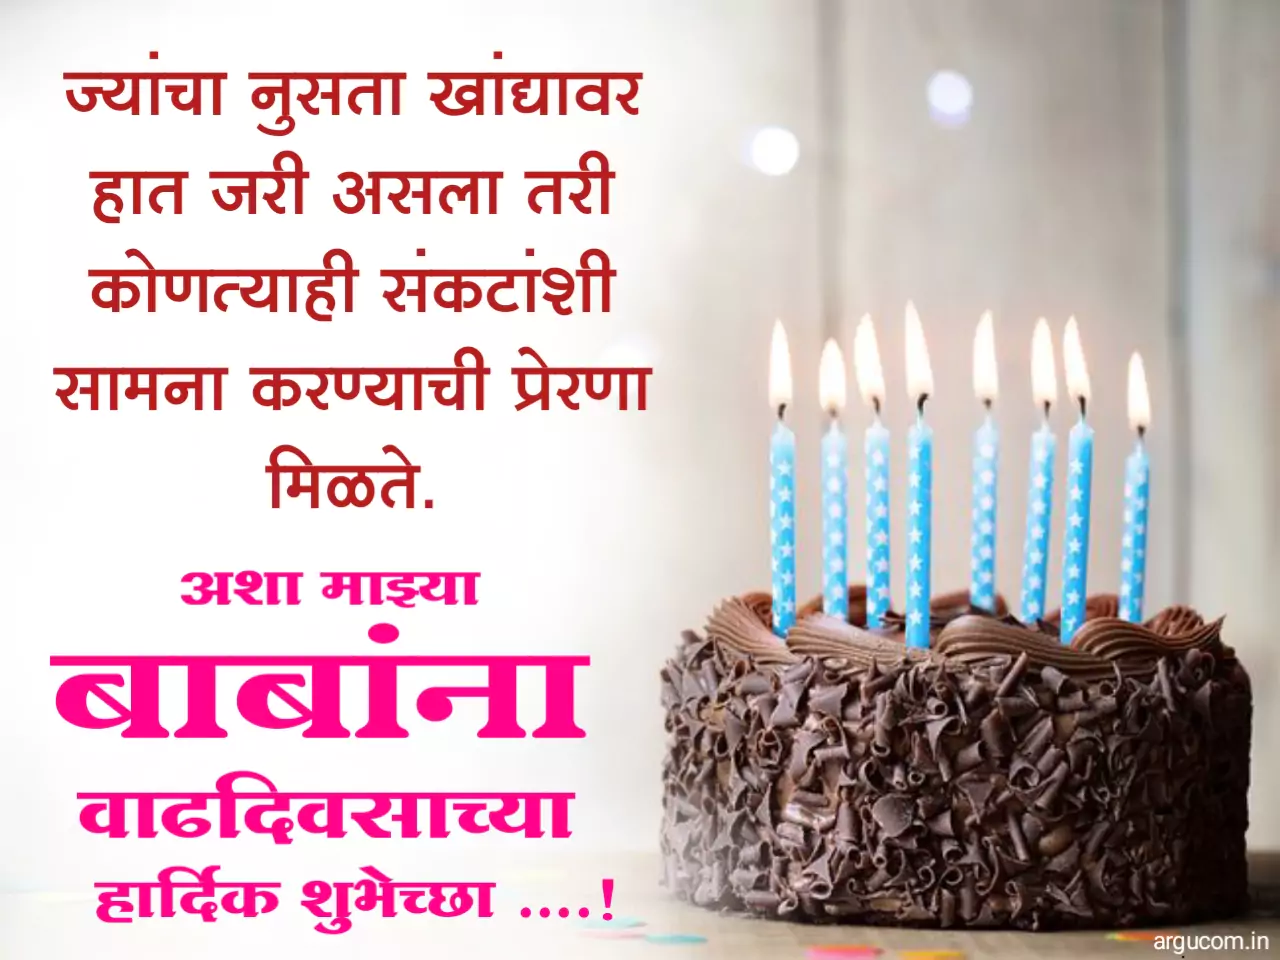 Baba birthday wishes in marathi